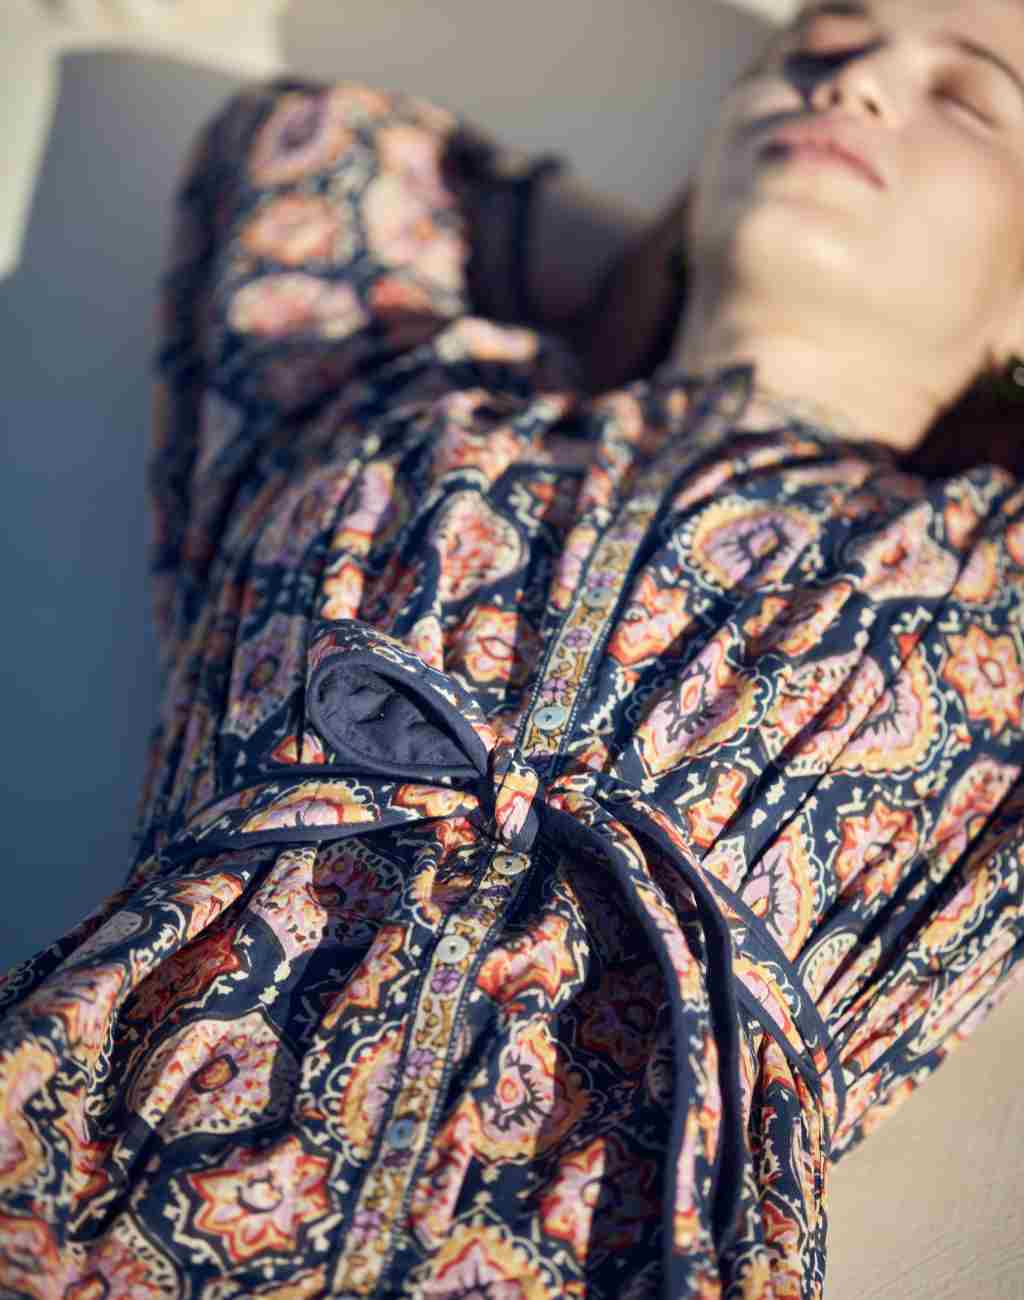 Block Print Shelli Shirtdress with Vibrant Mixed Prints and Padded Patchwork Yoke